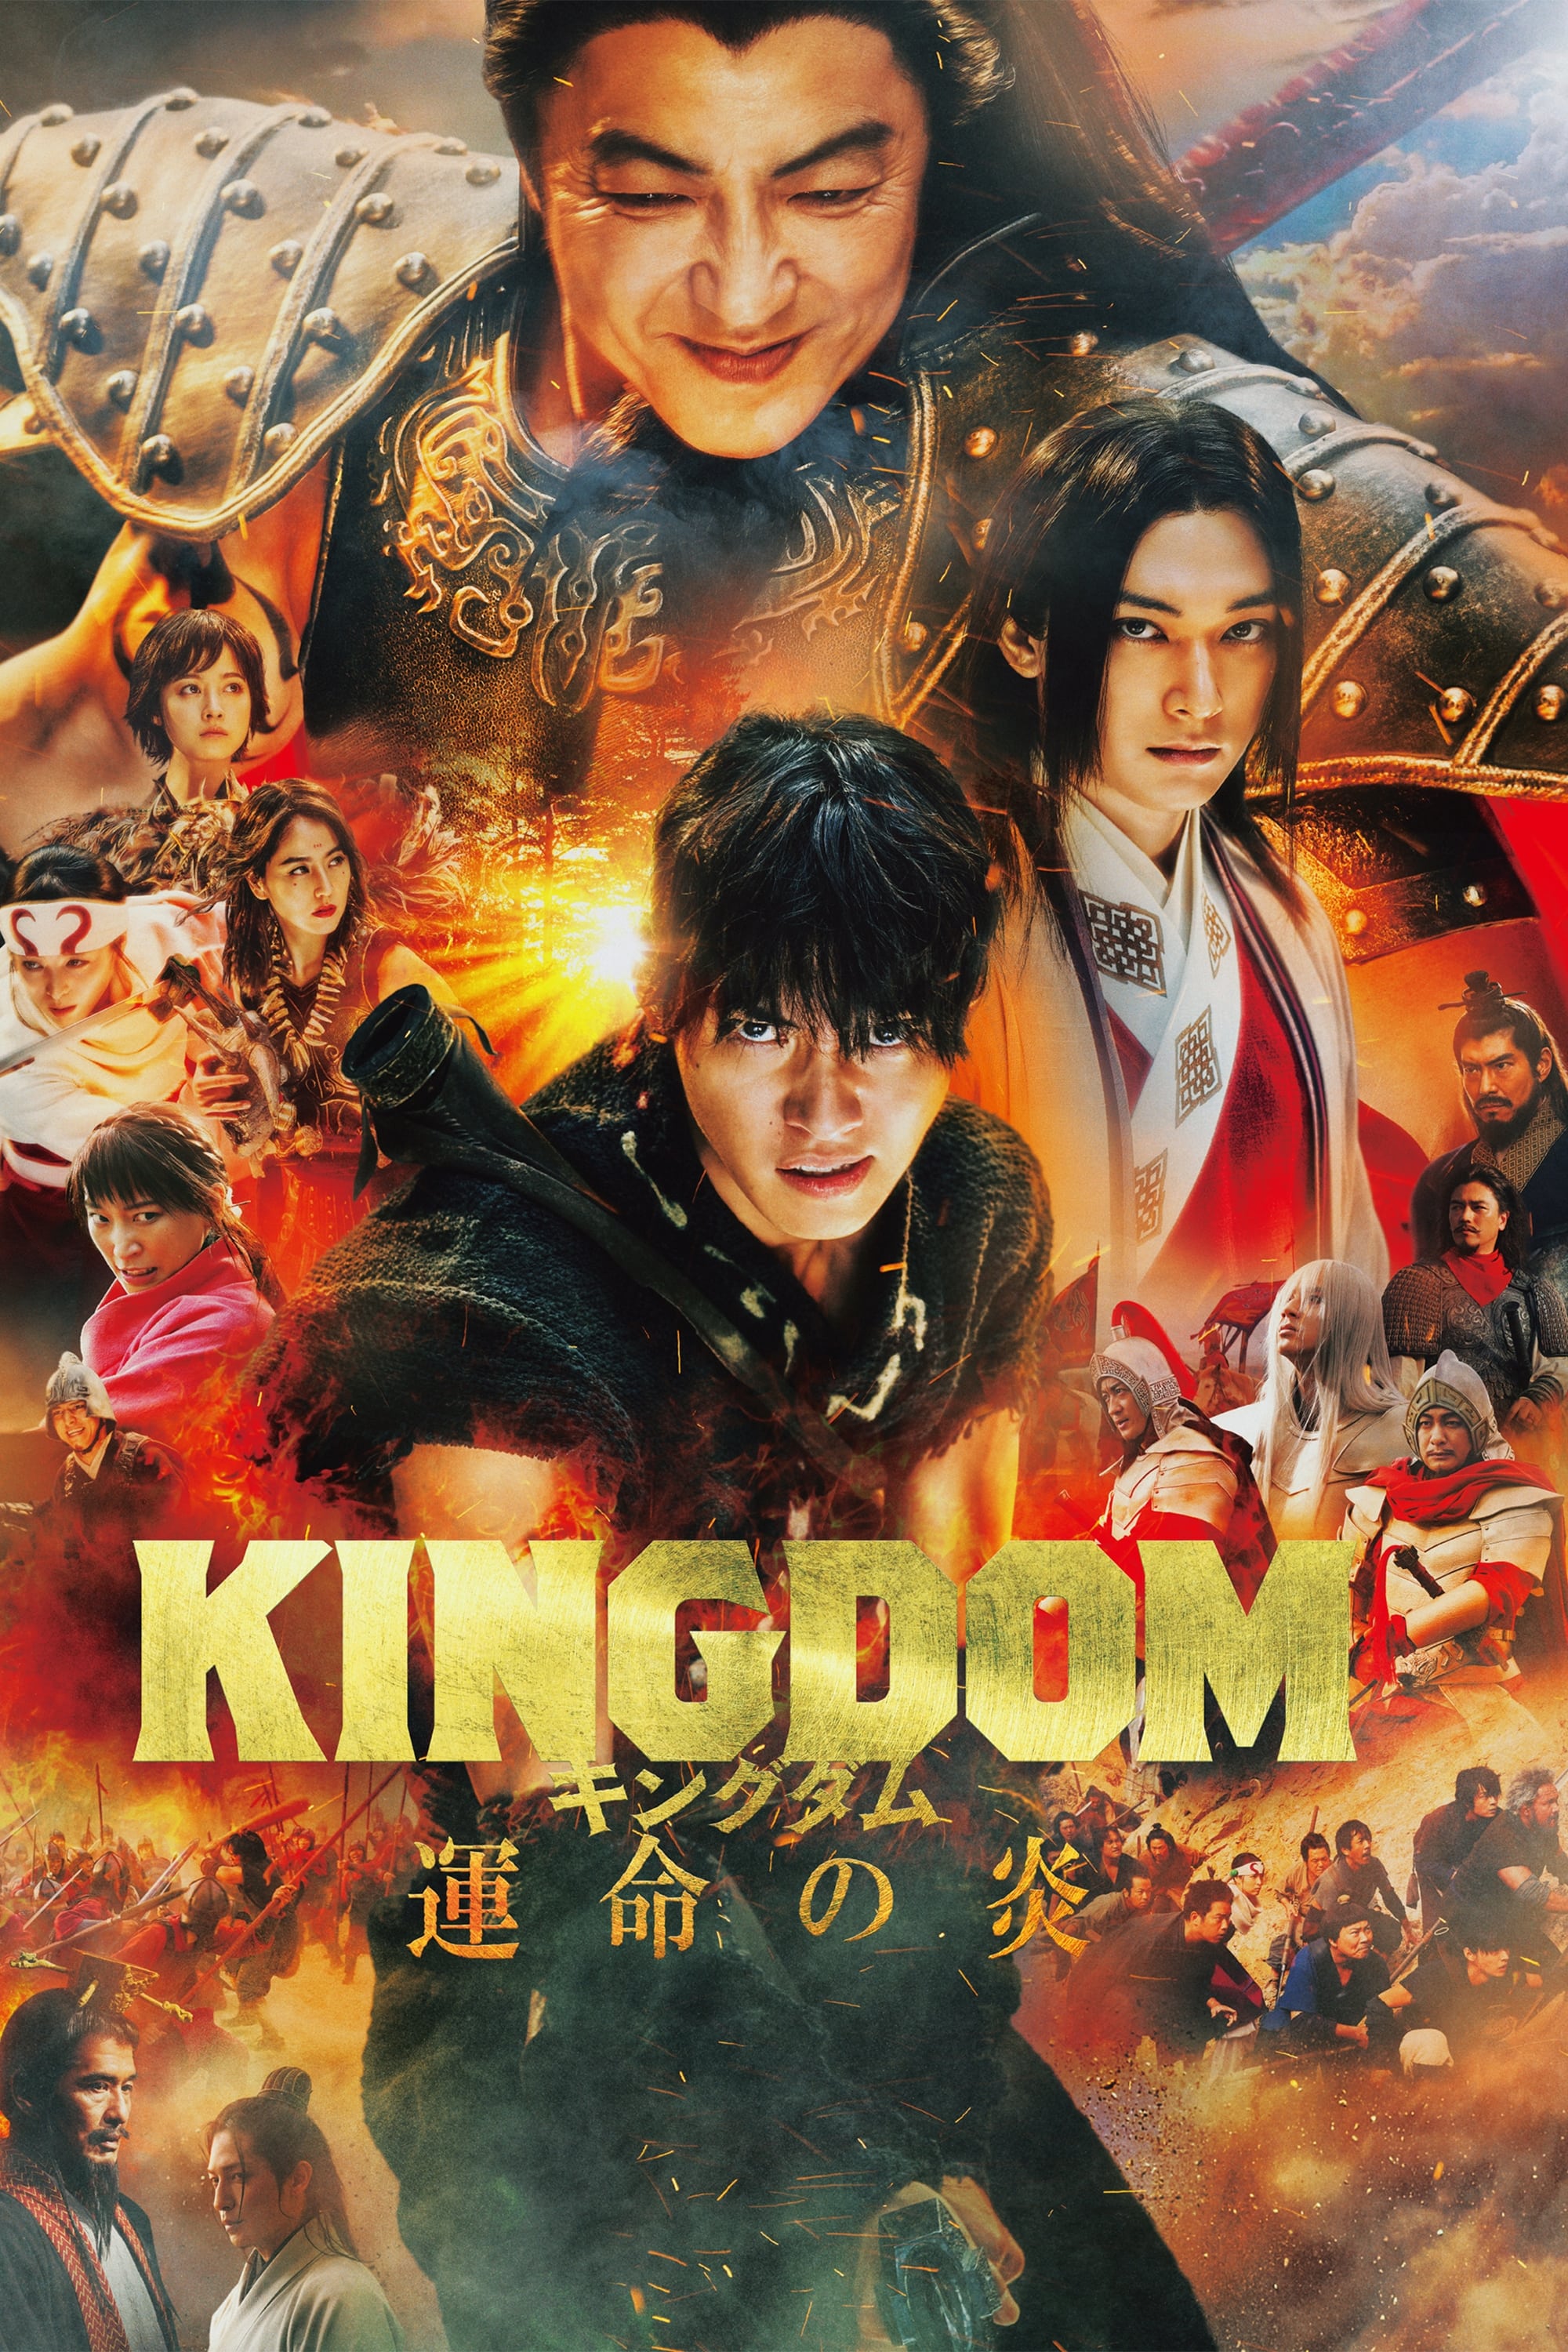 Kingdom 3: The Flame of Fate